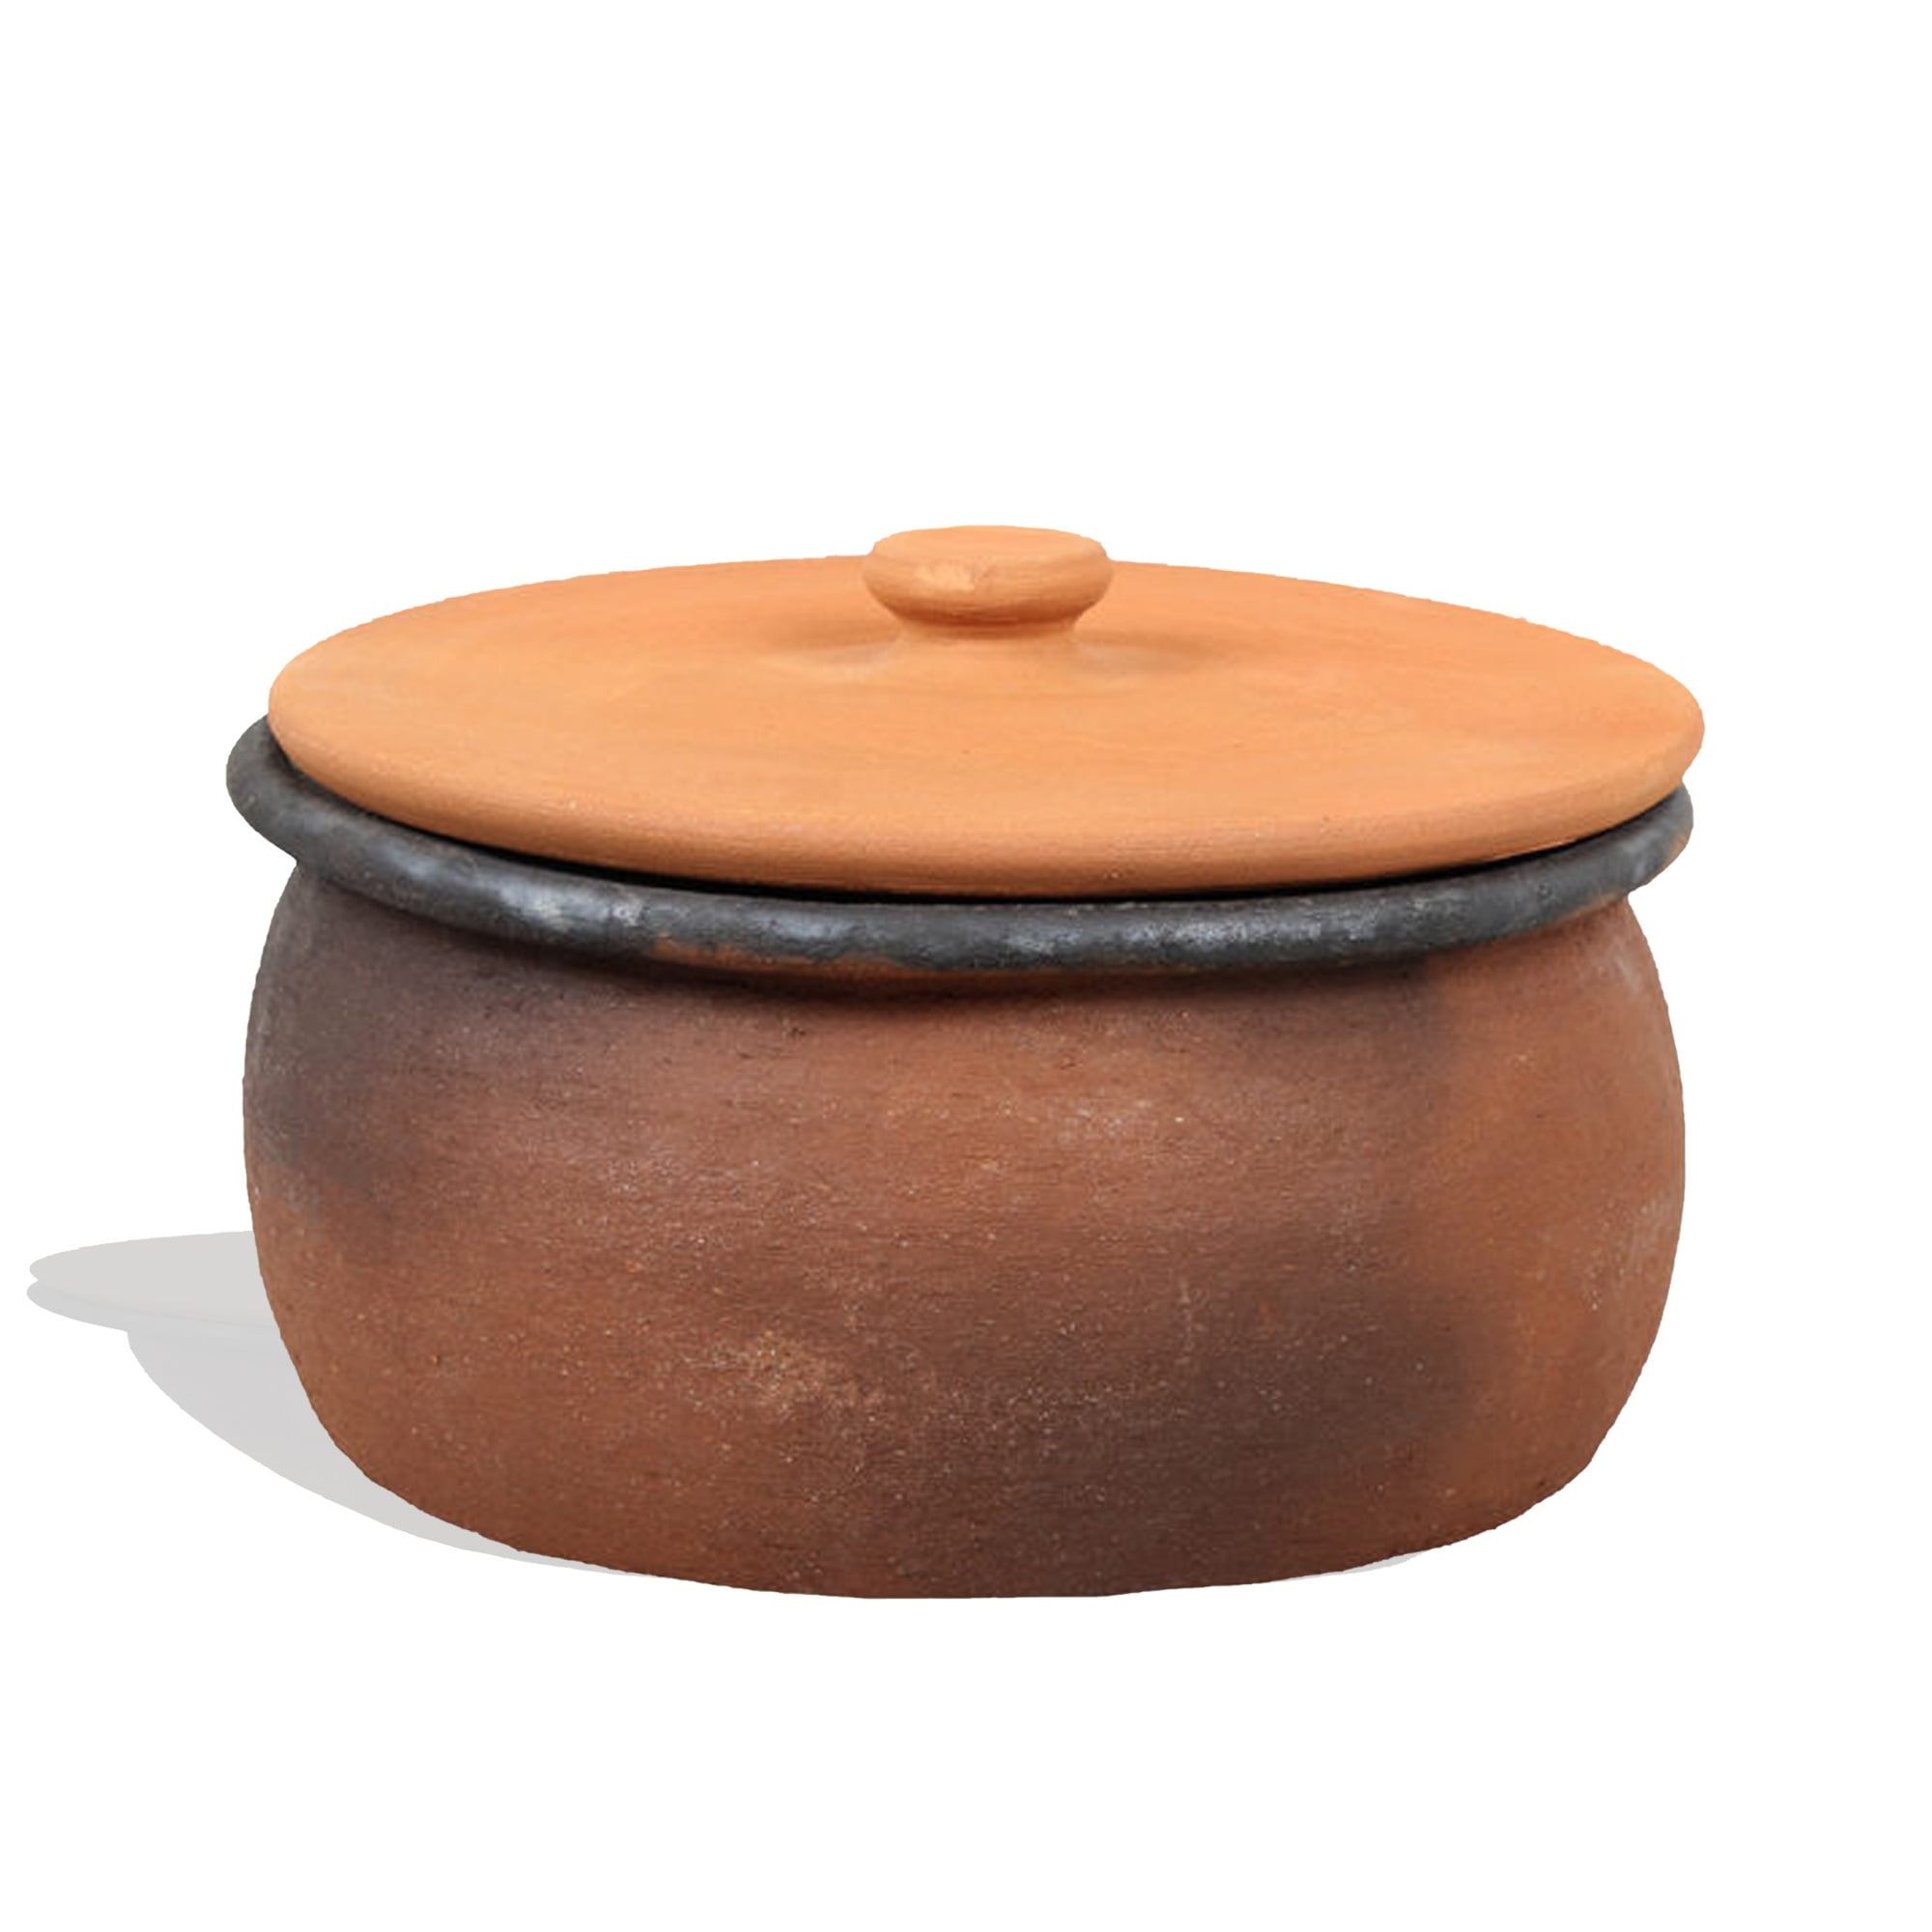 Baking Stewing Stoneware Ramekin Clay Cooking Pot w/Lid 1-Serving Casserole Dish 